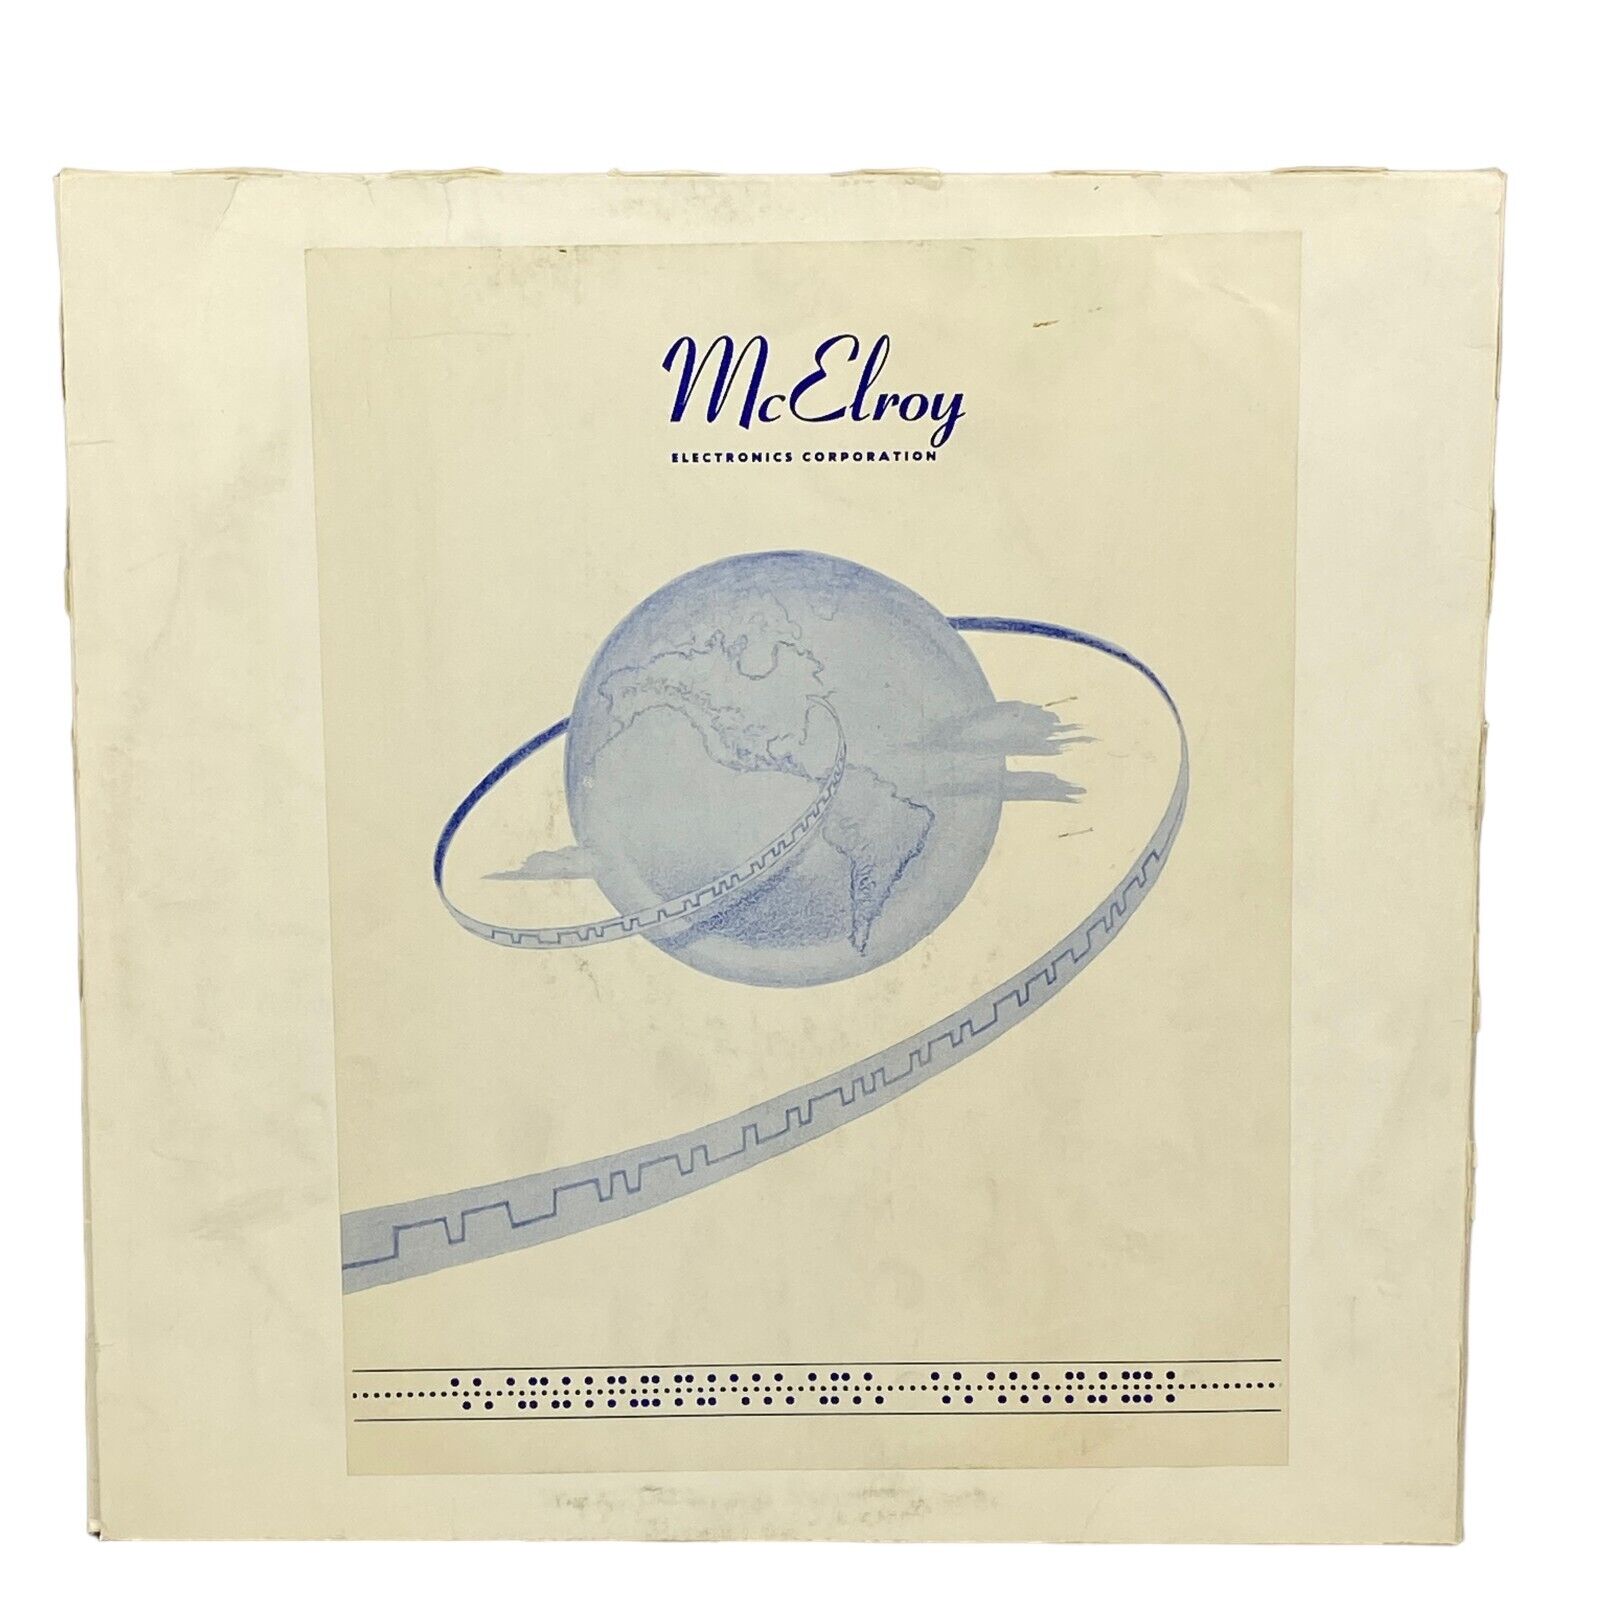 Set of 3 Discs, McElroy Electronics Corporation - Record Set MC 209 Vinyl Record